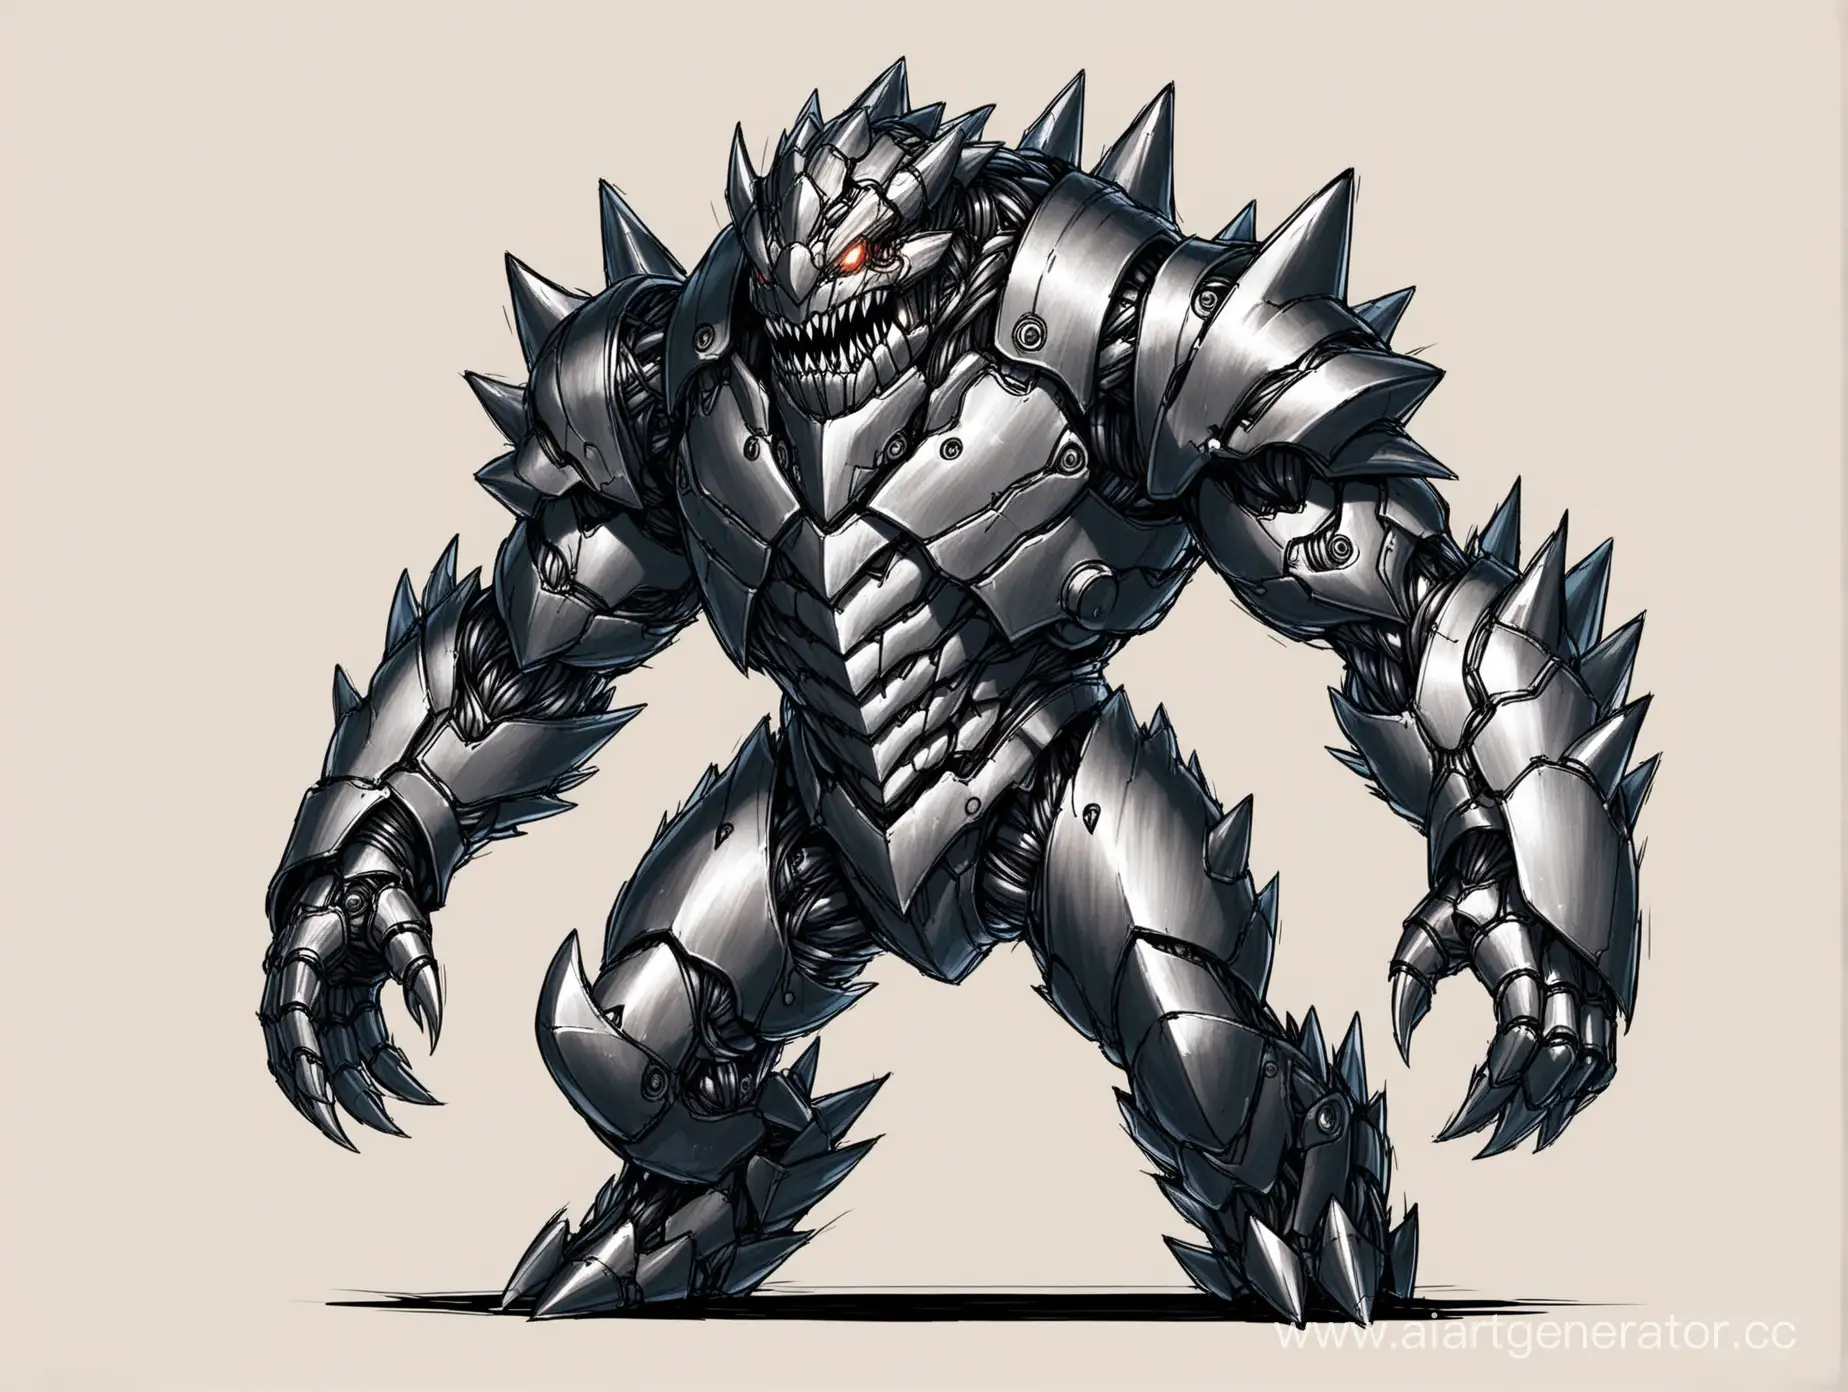 Futuristic-Iron-Monster-Mech-Warrior-in-Urban-Destruction